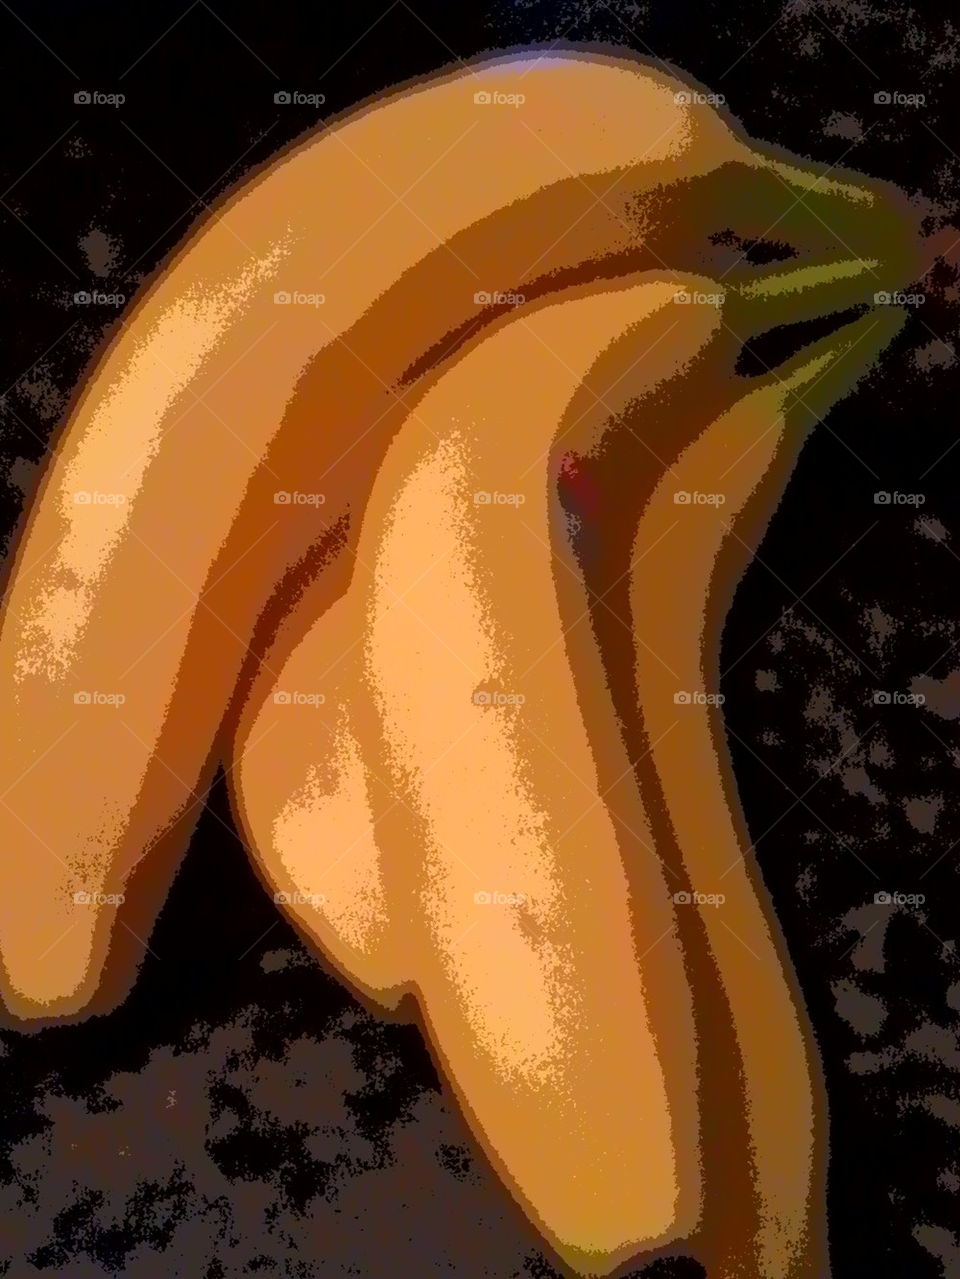 Bananas ripe